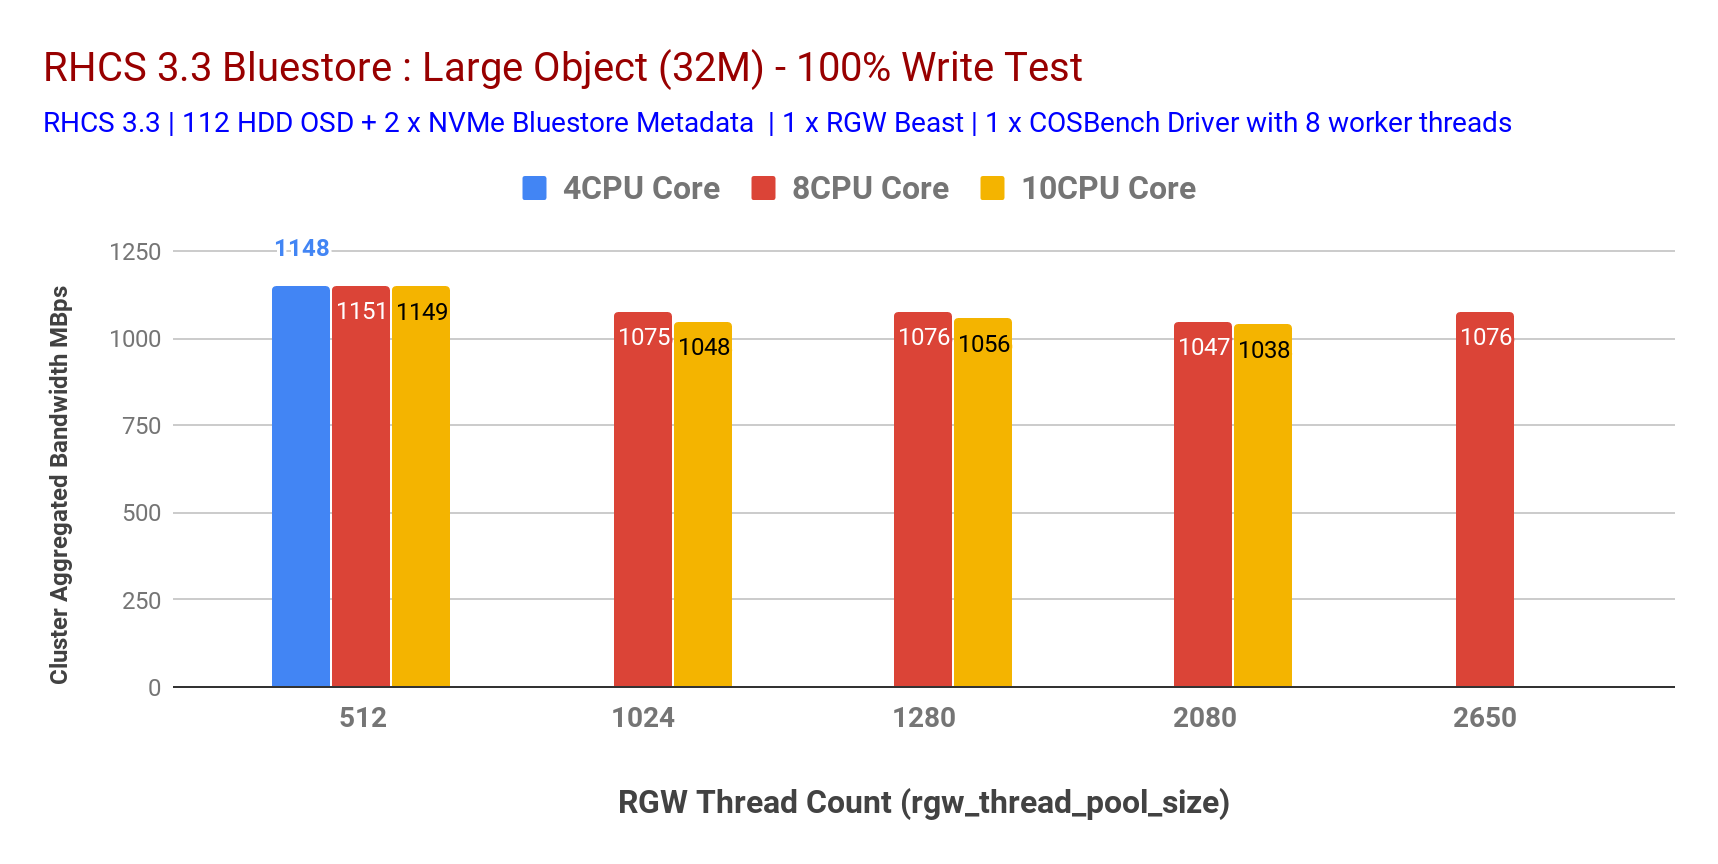 Chart 6: Large Object 100% write test